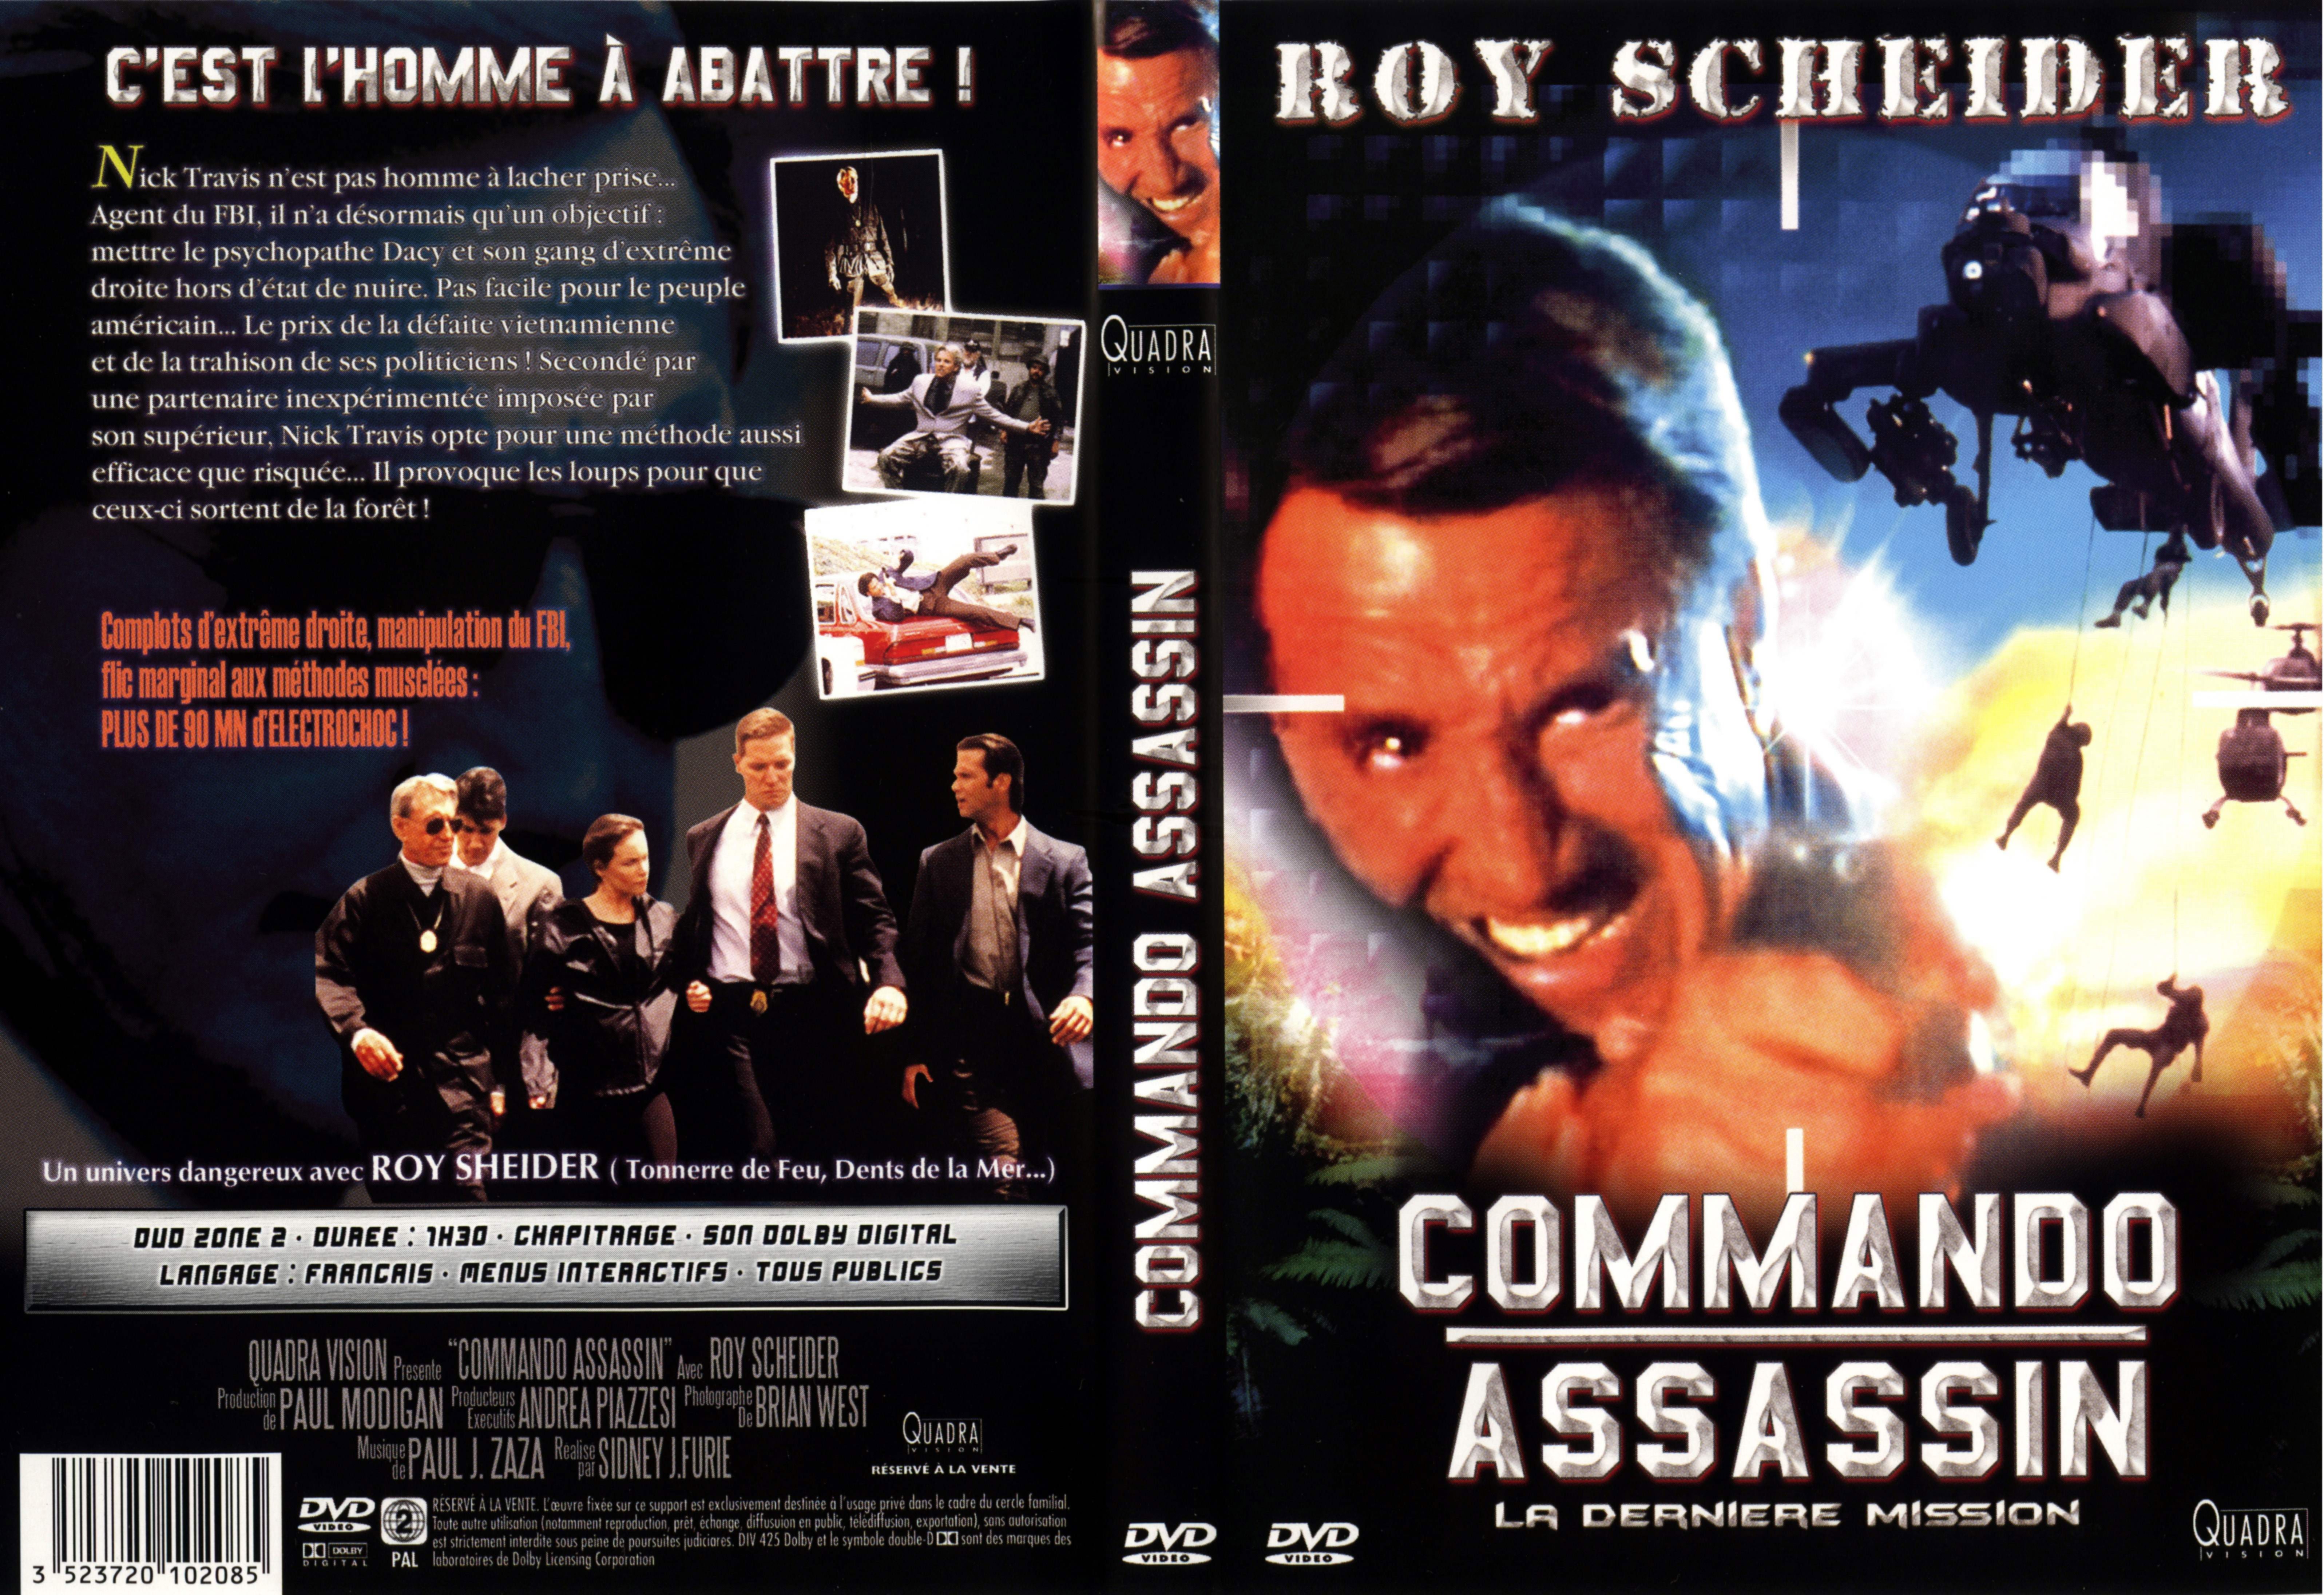 Jaquette DVD Commando assassin